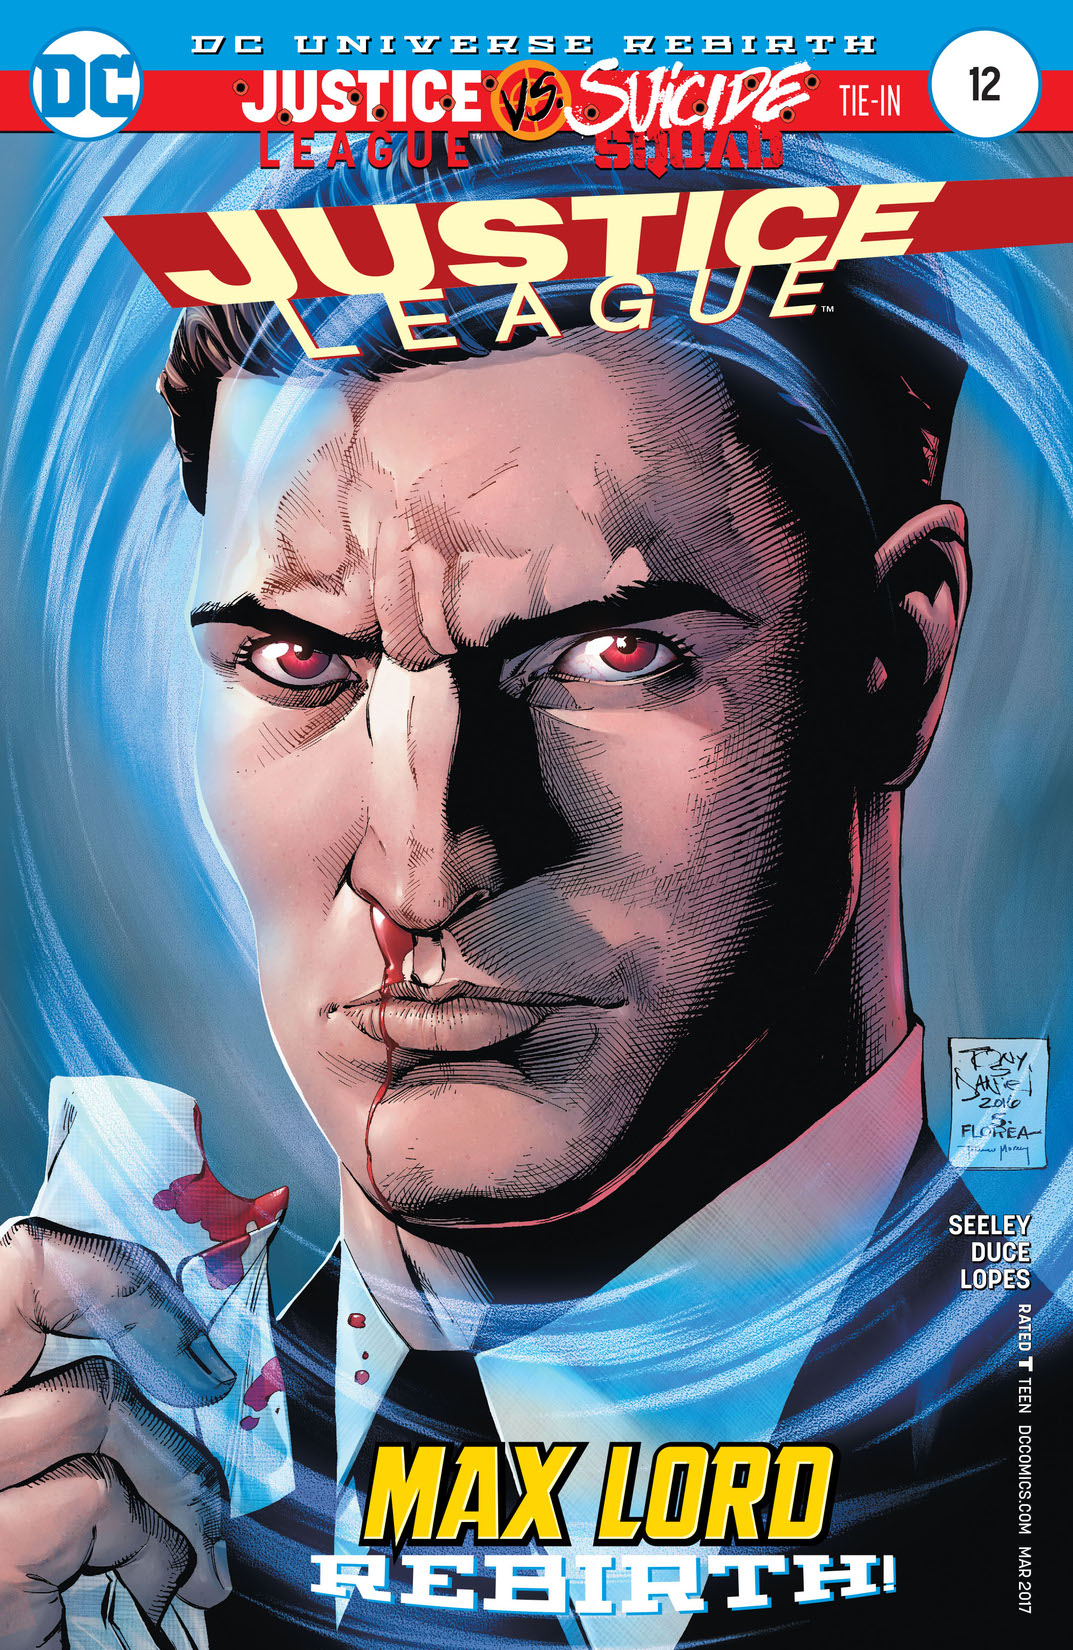 Justice League (2016-) #12 preview images